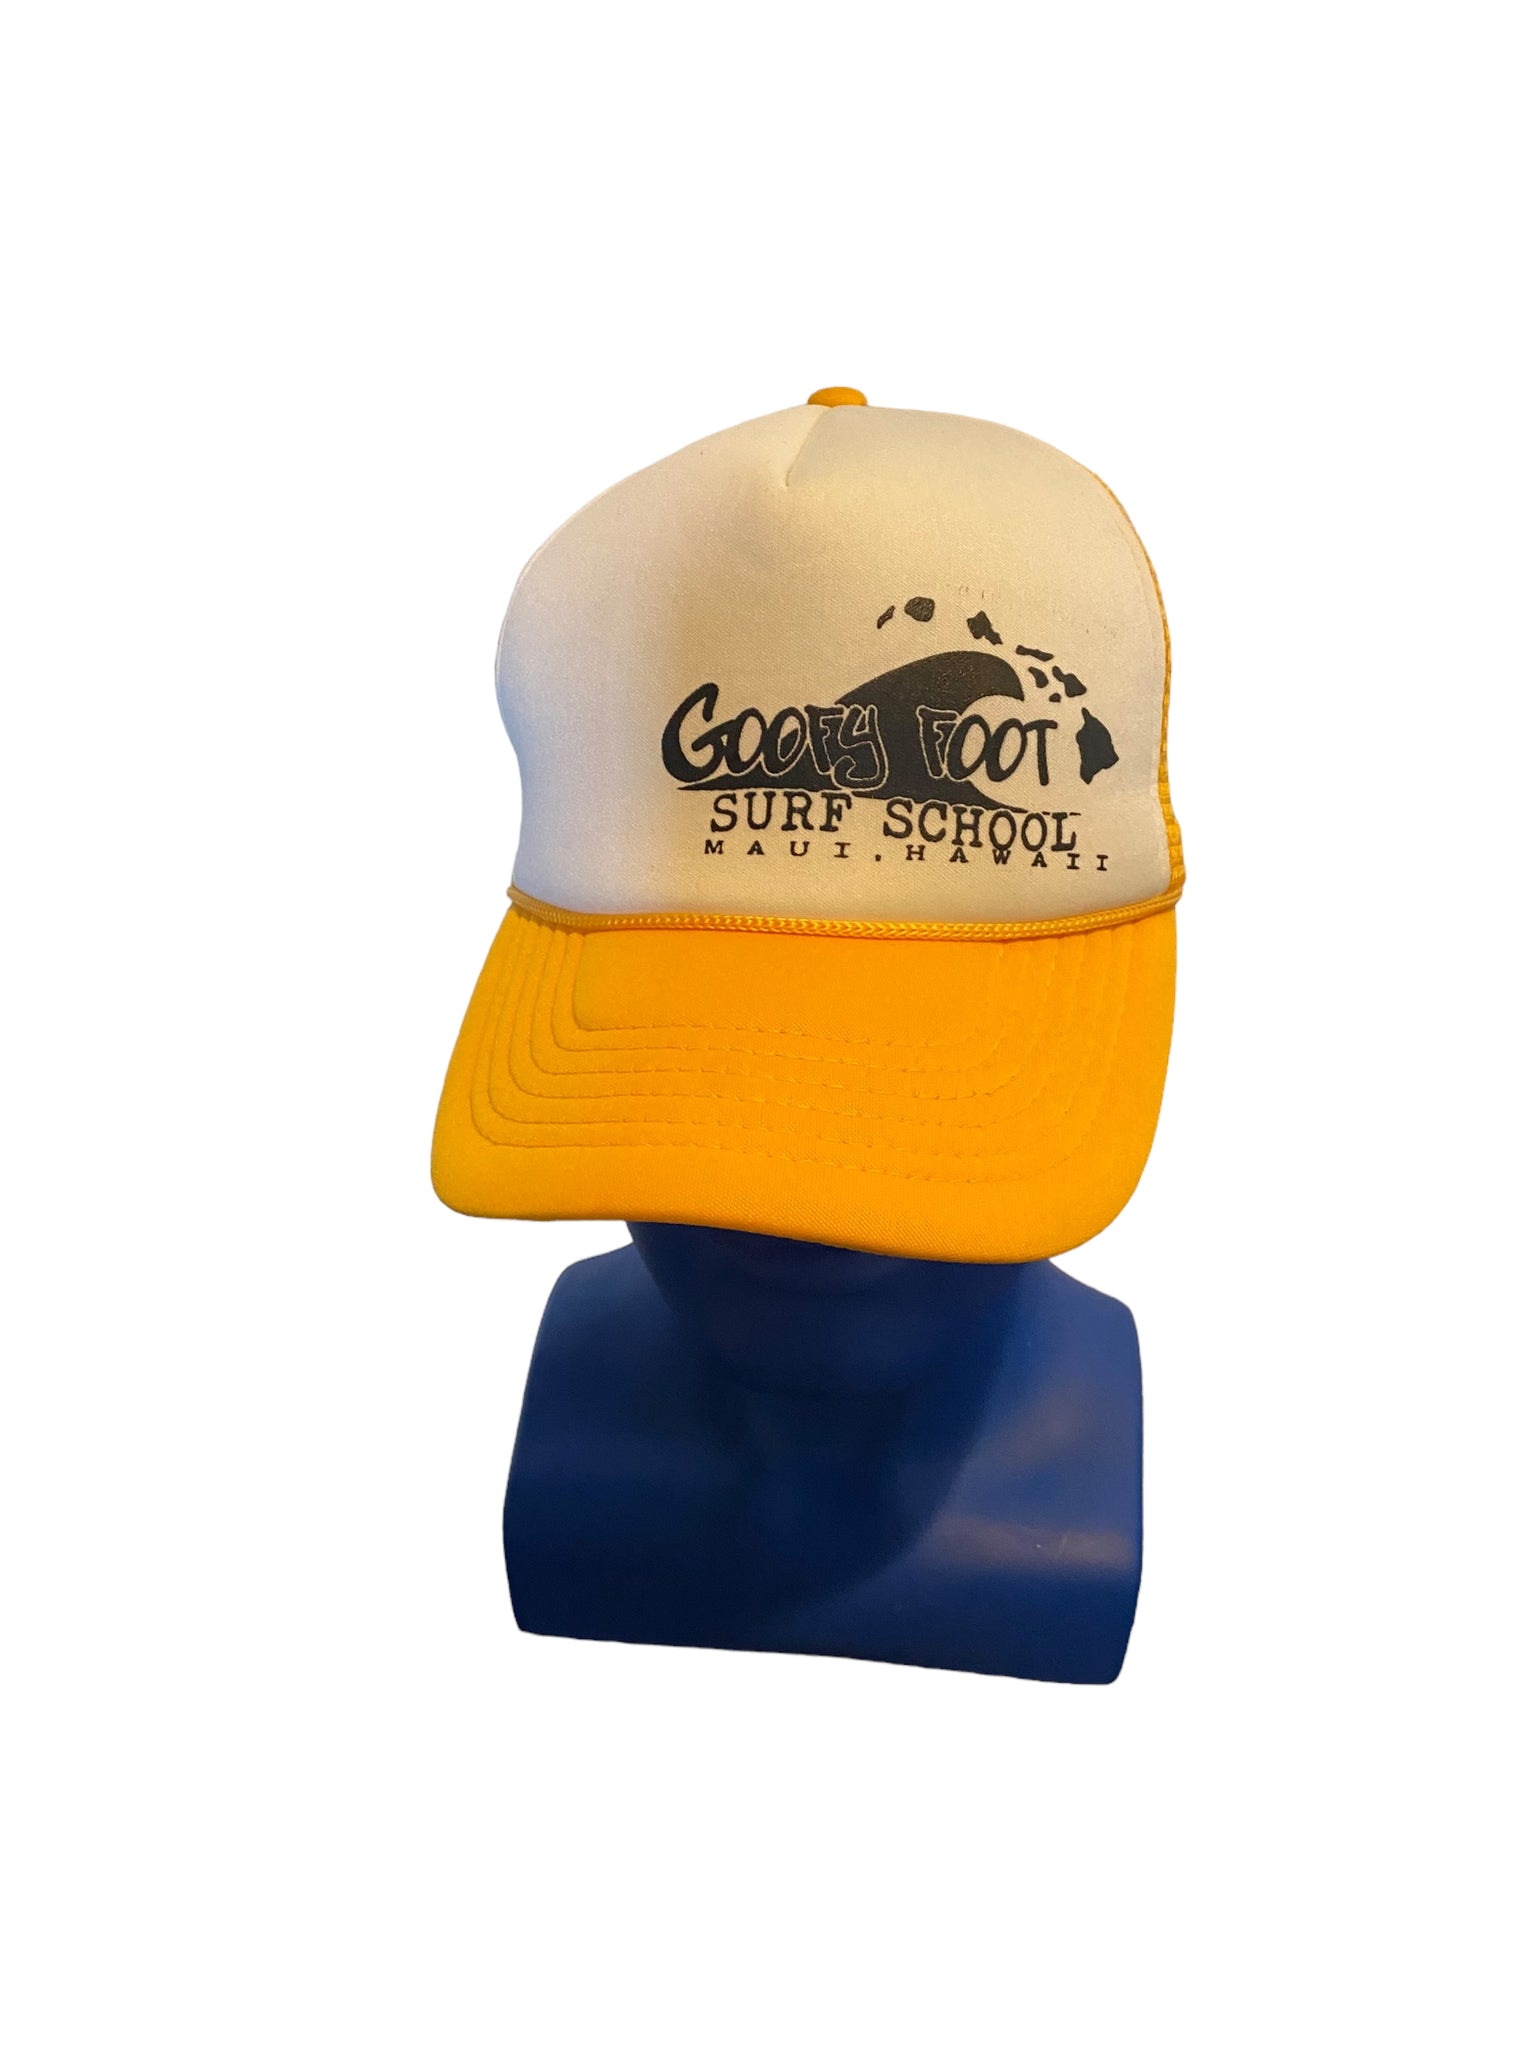 Vintage Hawaii Surf School Snapback Hat Trucker Adult Yellow Goofy Foot clean